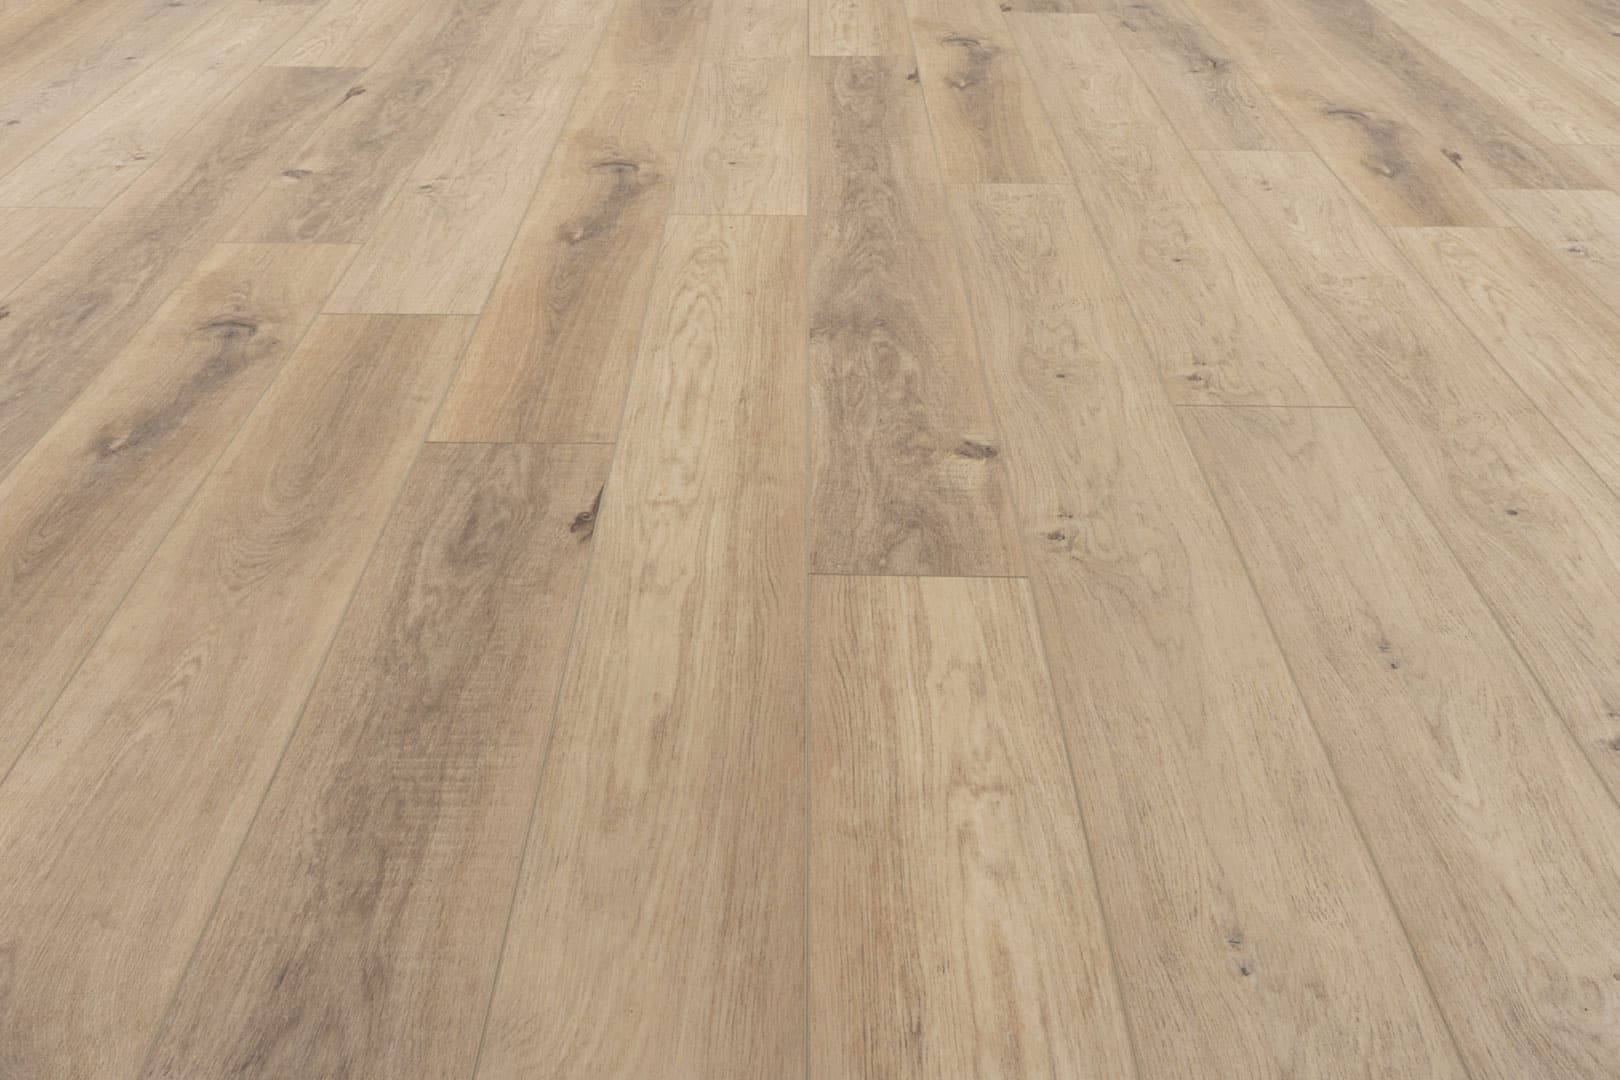 Moda Living flooring sample